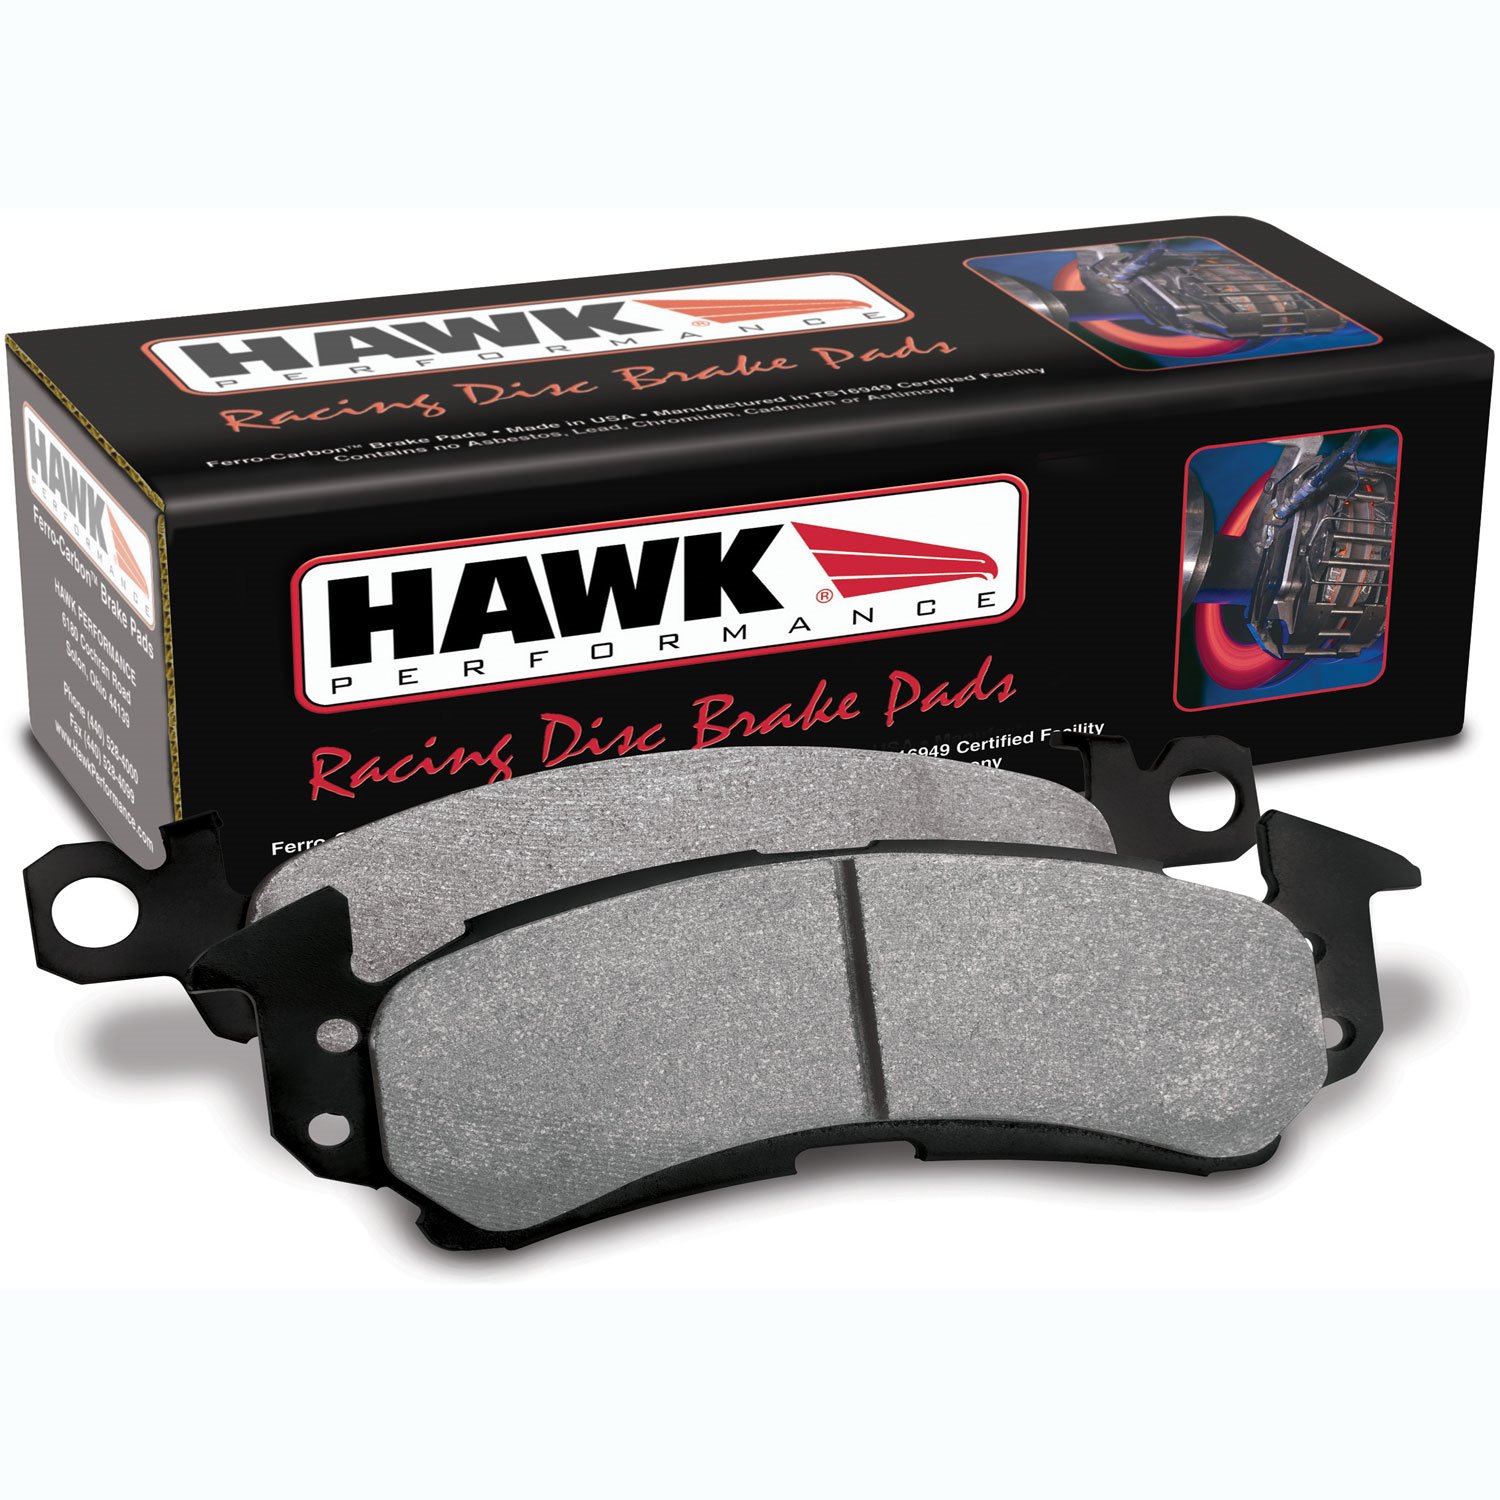 Disc Brake Pad HT-10 w/0.670 Thickness